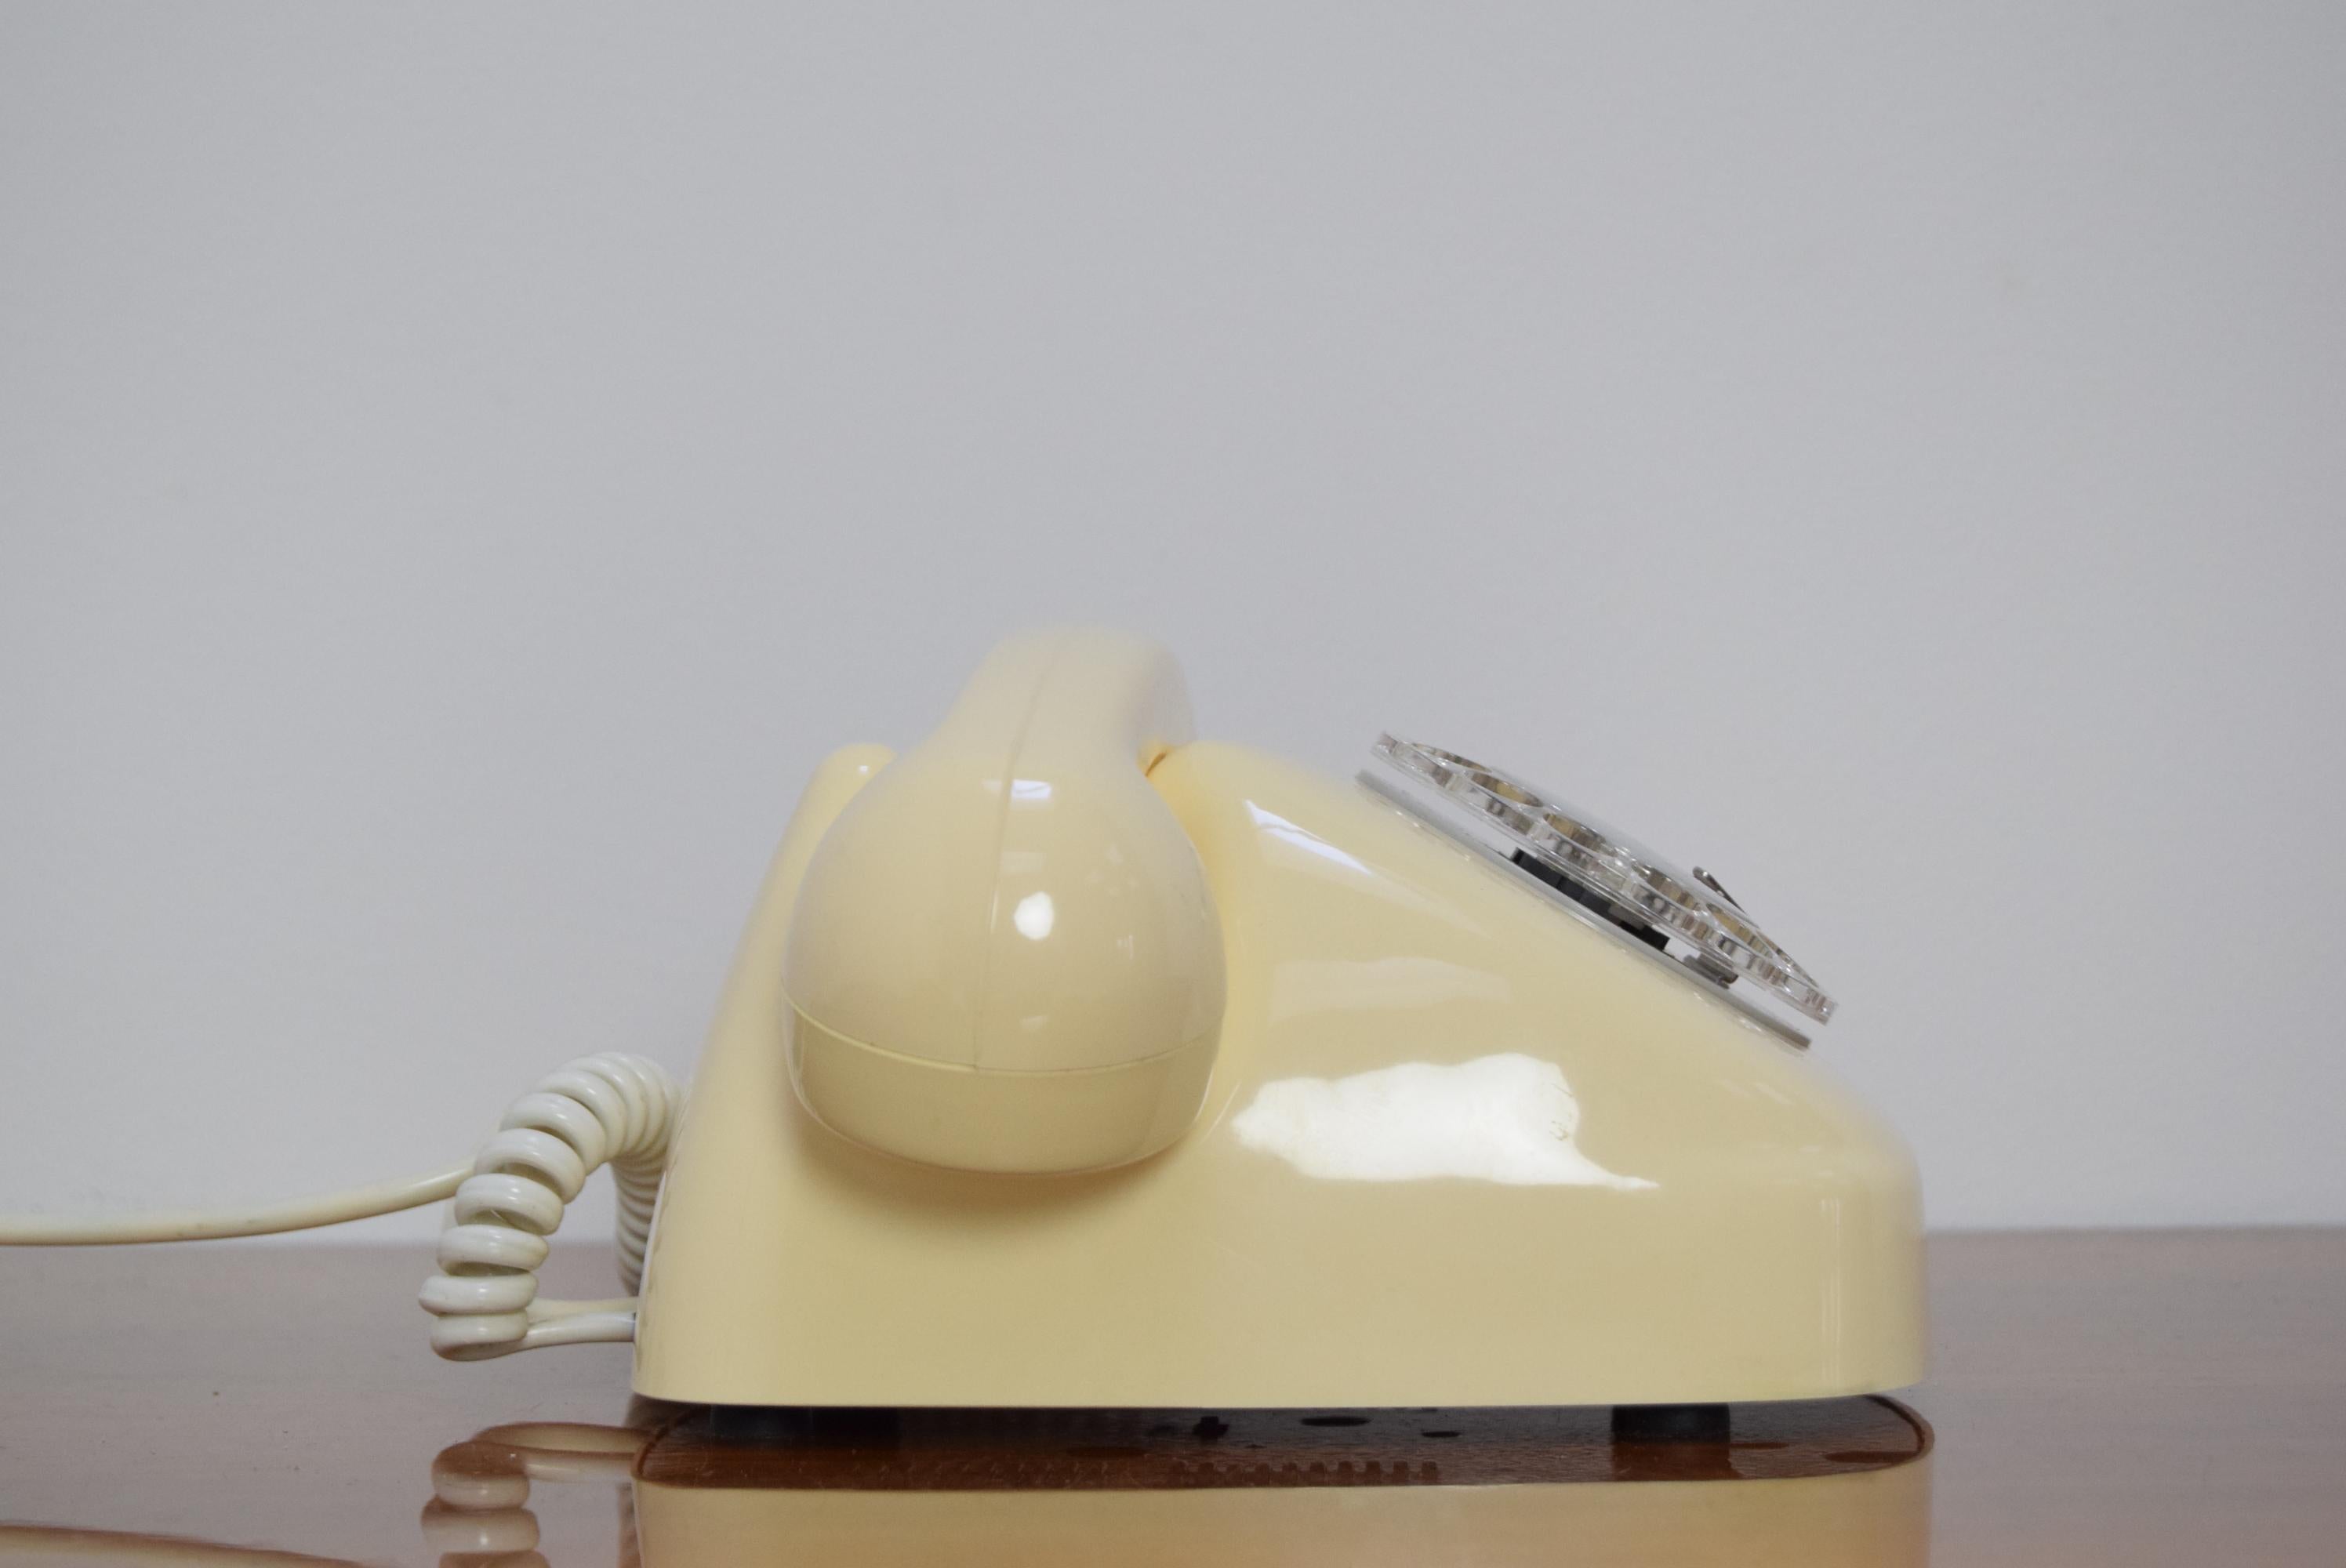 Czech Mid-Century Design Telephone by Tesla, 1979